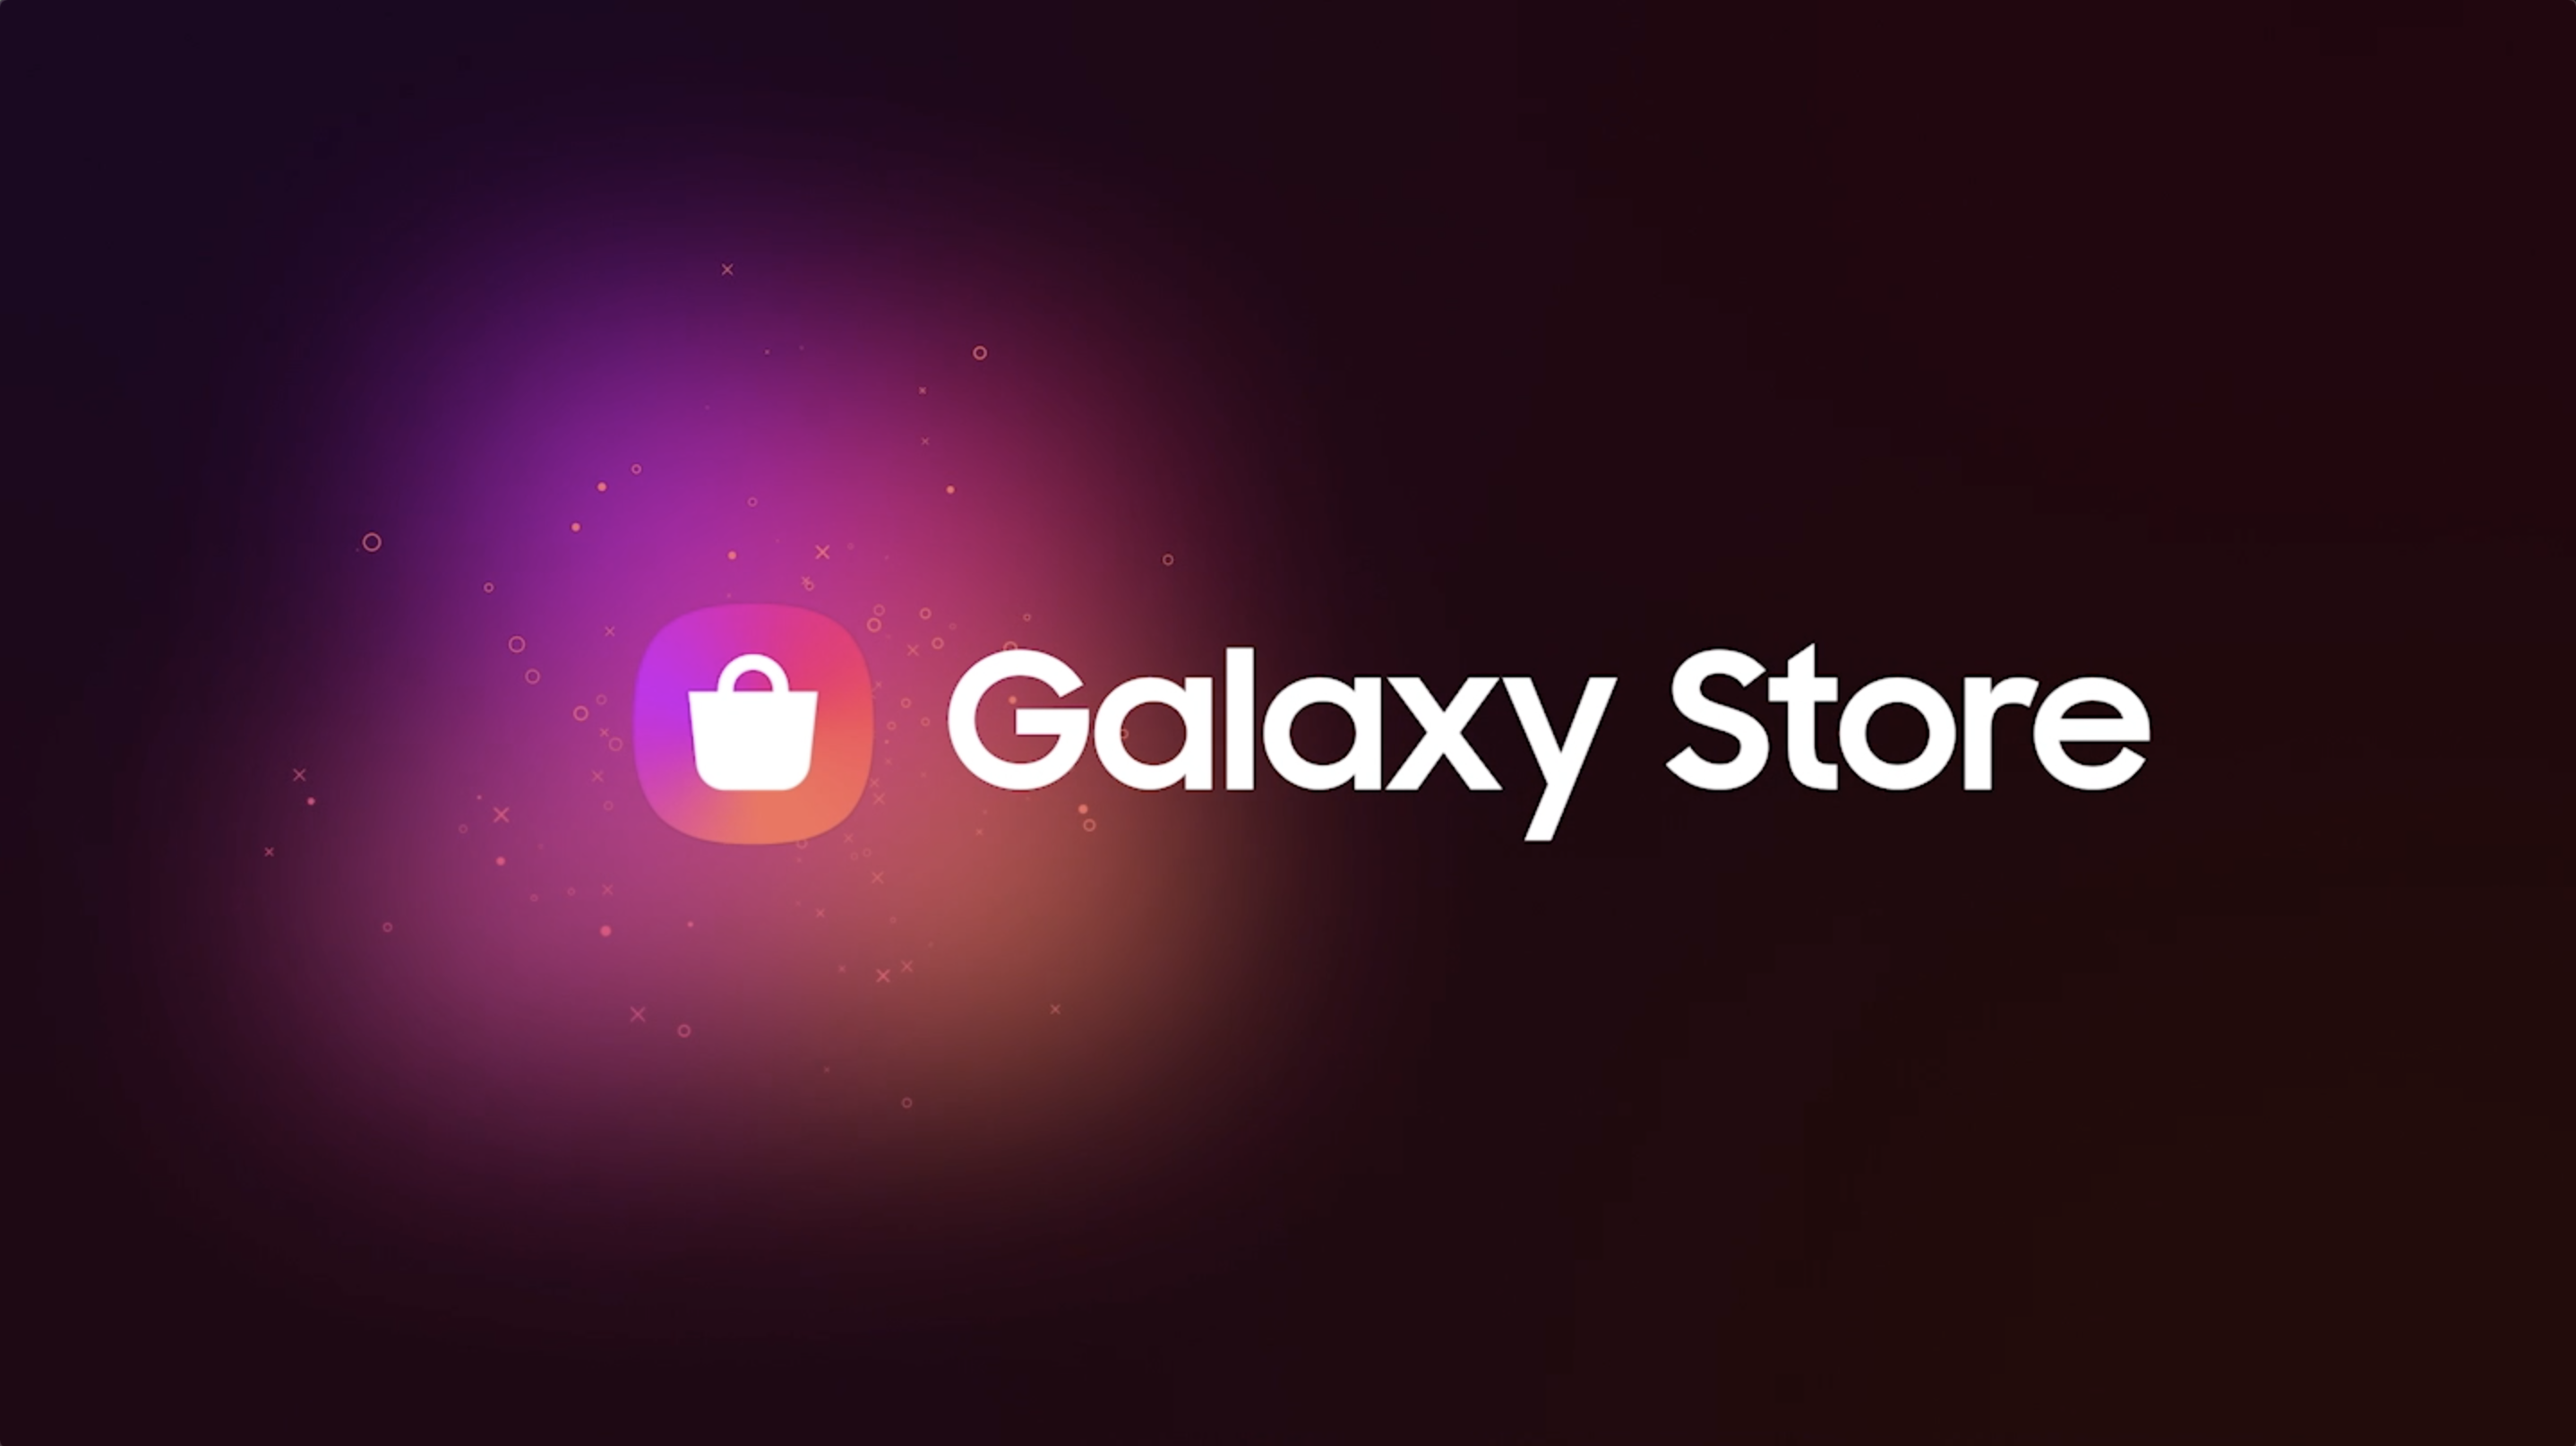 Samsung corrige vulnerabilidades que expusieron la Galaxy Store a atacantes